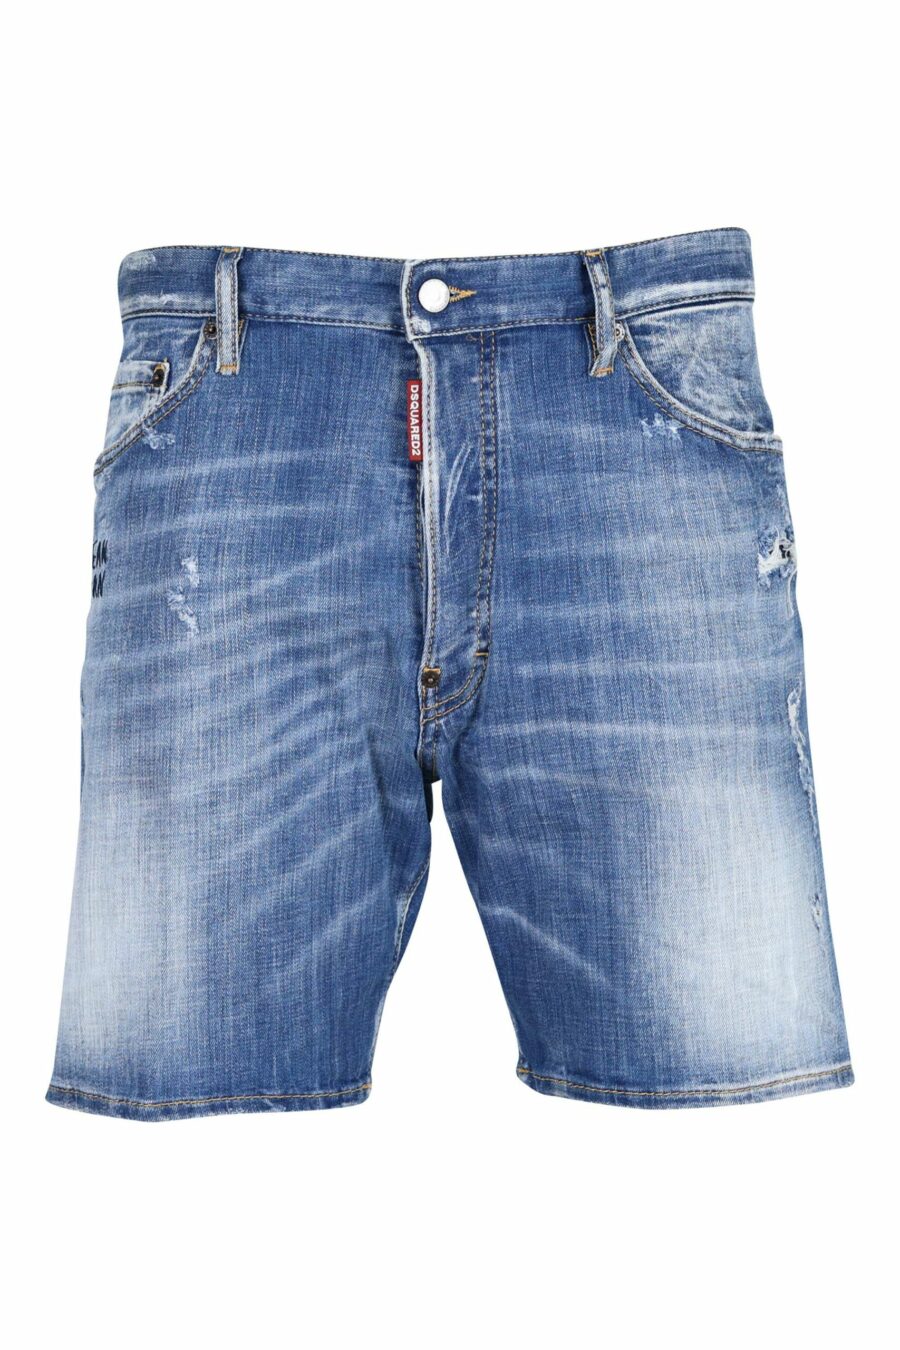 Blue denim shorts "marine short" - 8054148311445 scaled